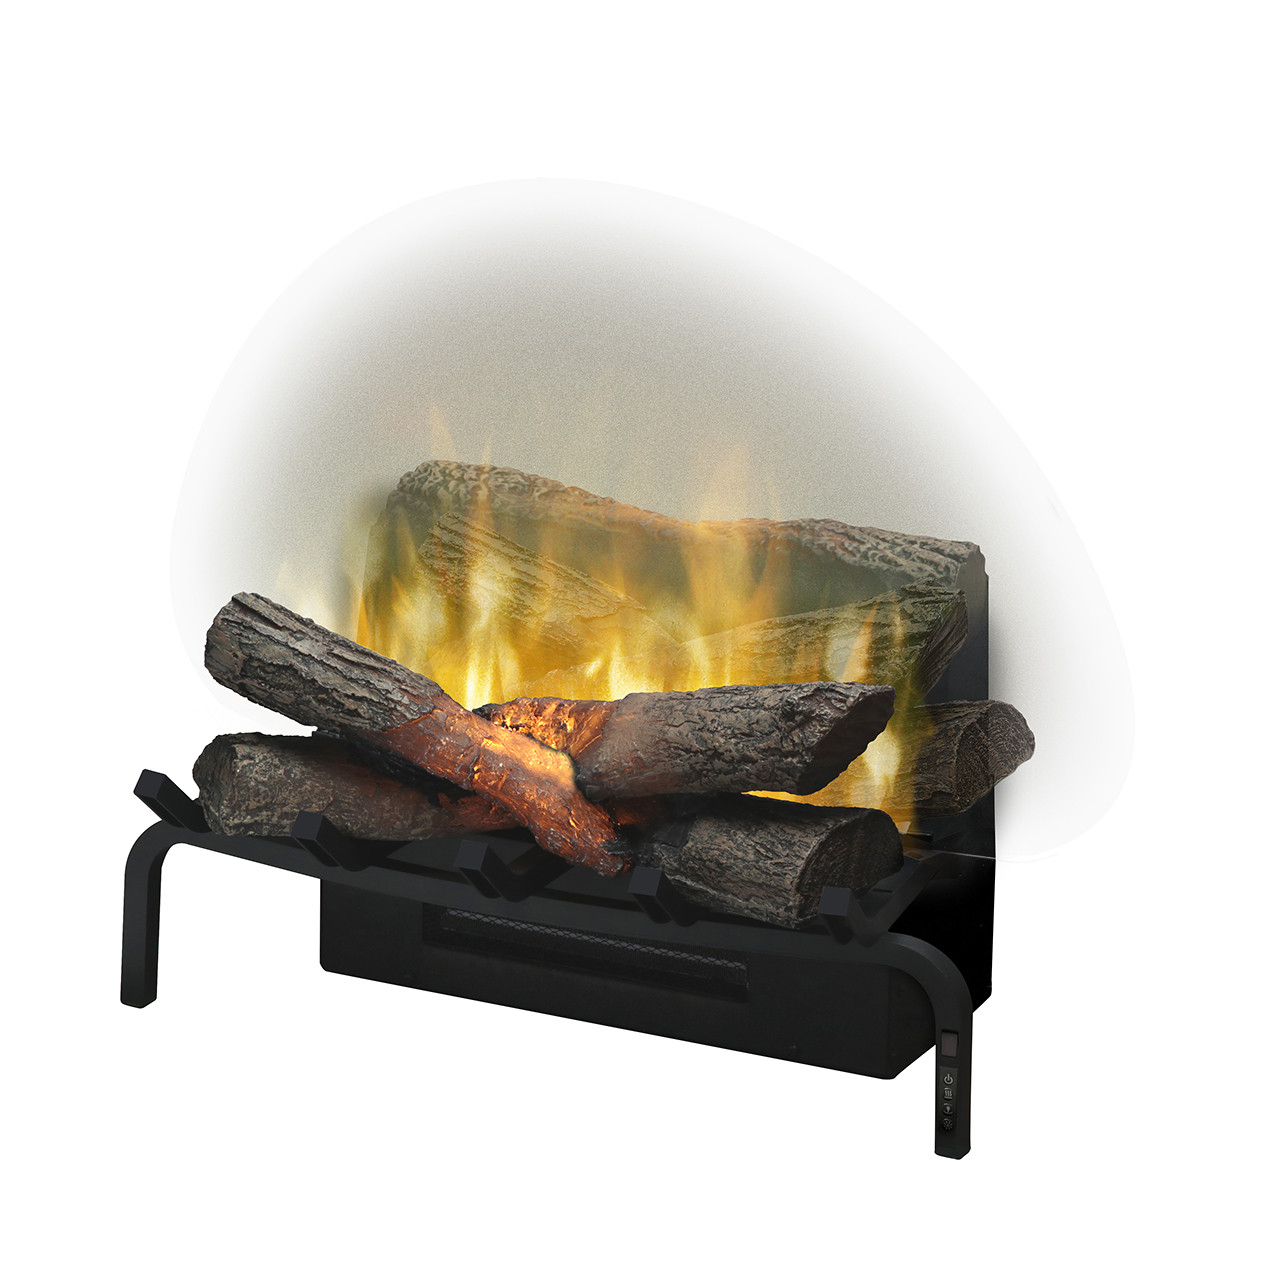 Electric Logs Fireplace Inserts
 Dimplex Electric Fireplaces Fireboxes & Inserts